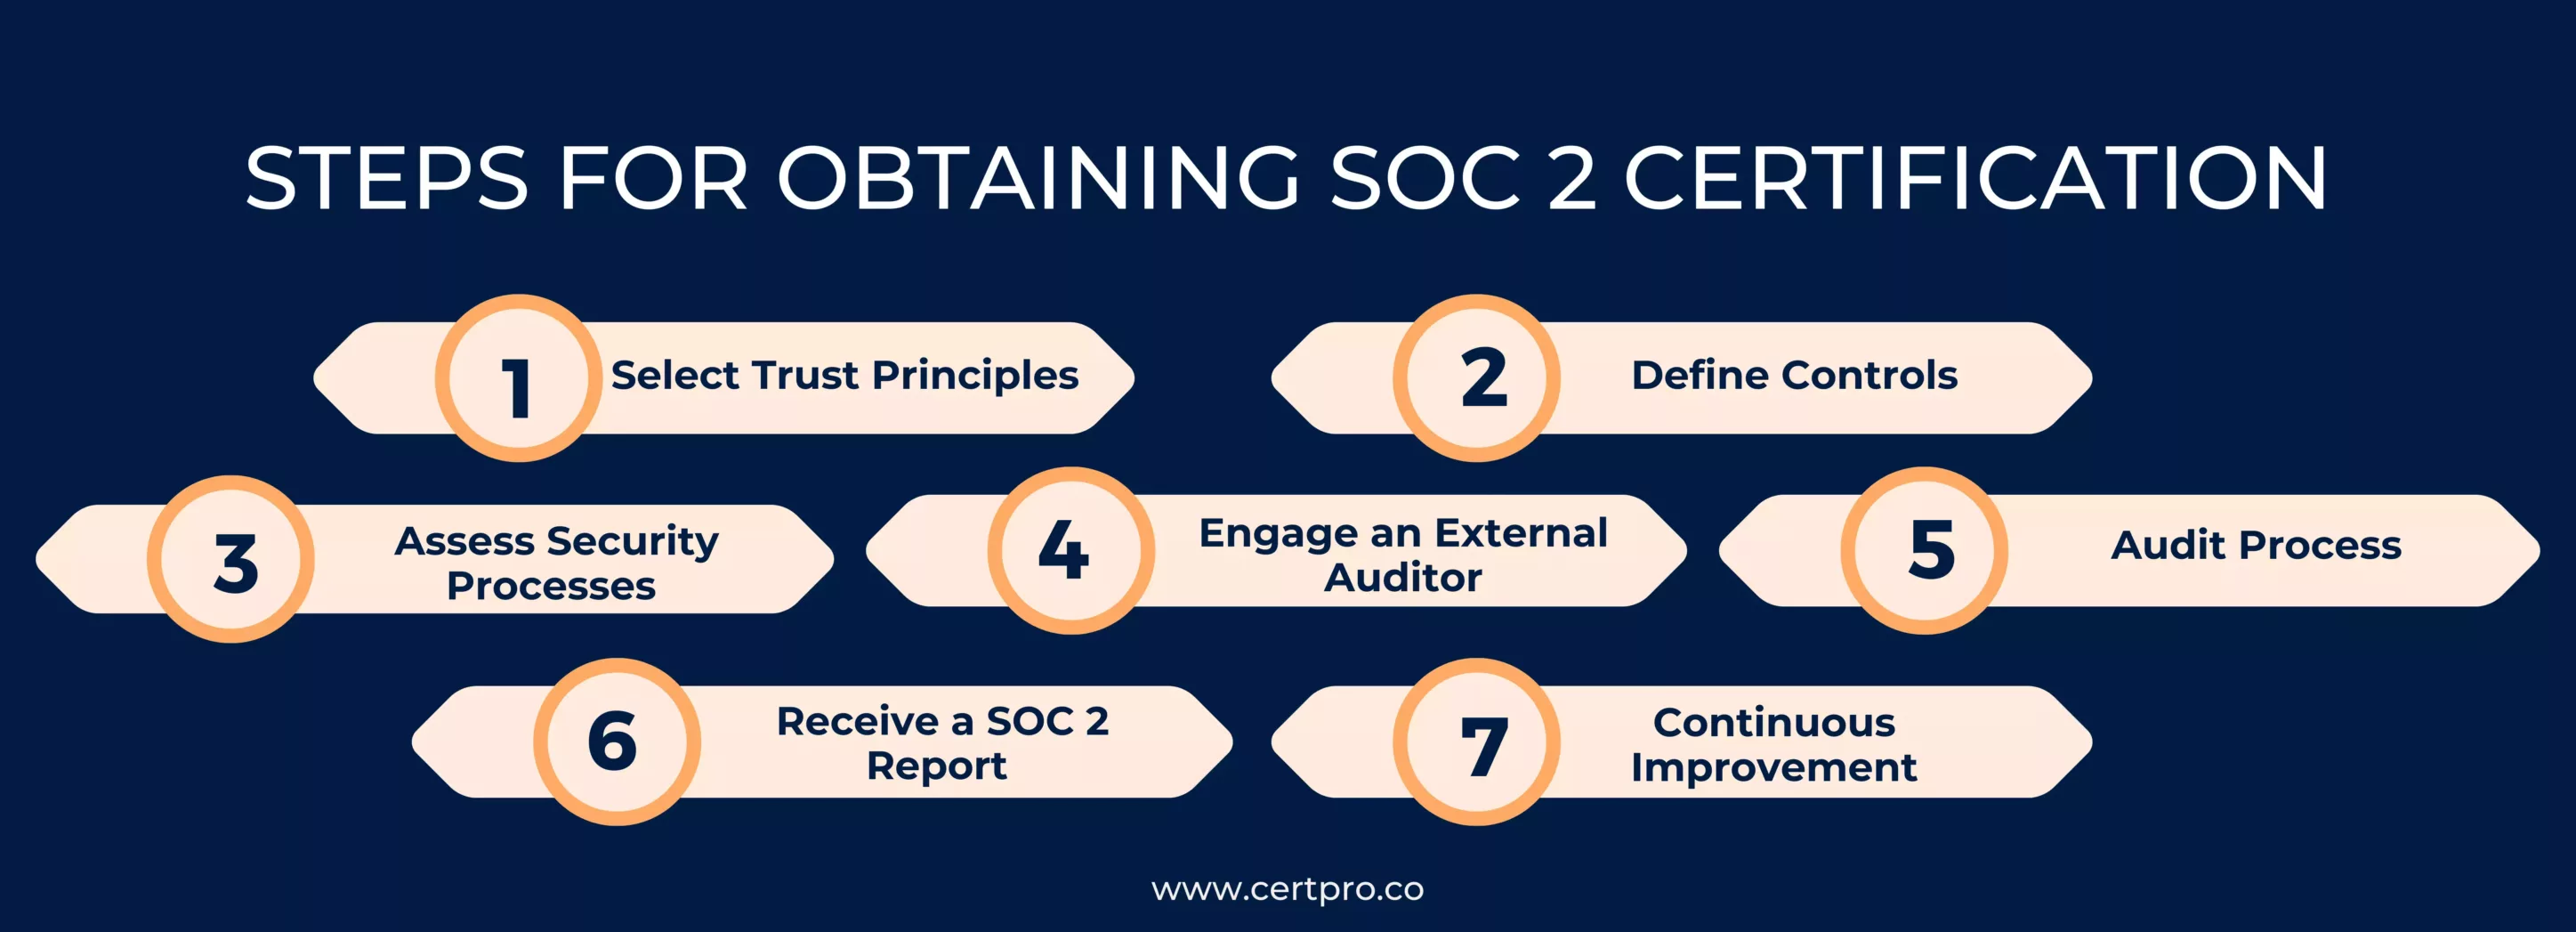 Steps for obtaining SOC 2 Certification